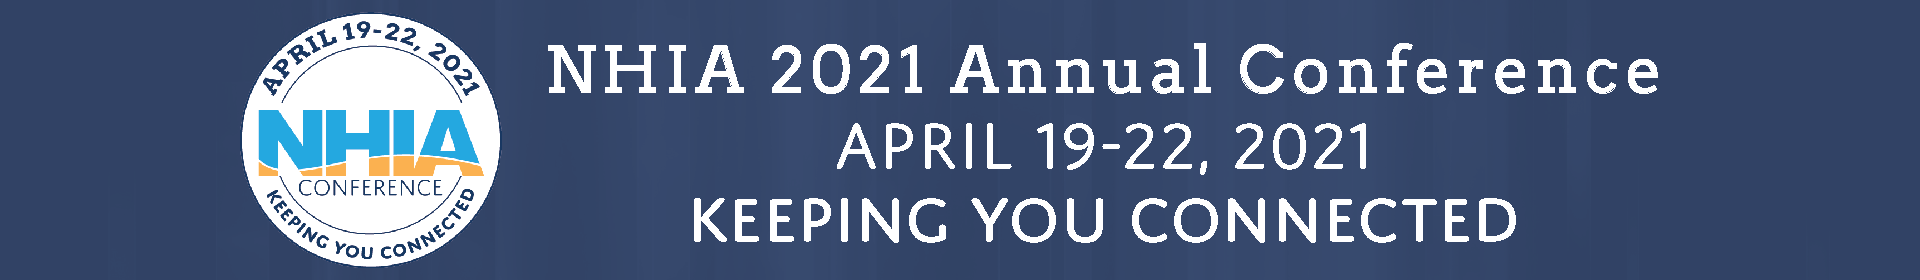 NHIA 2021 Annual Meeting Event Banner